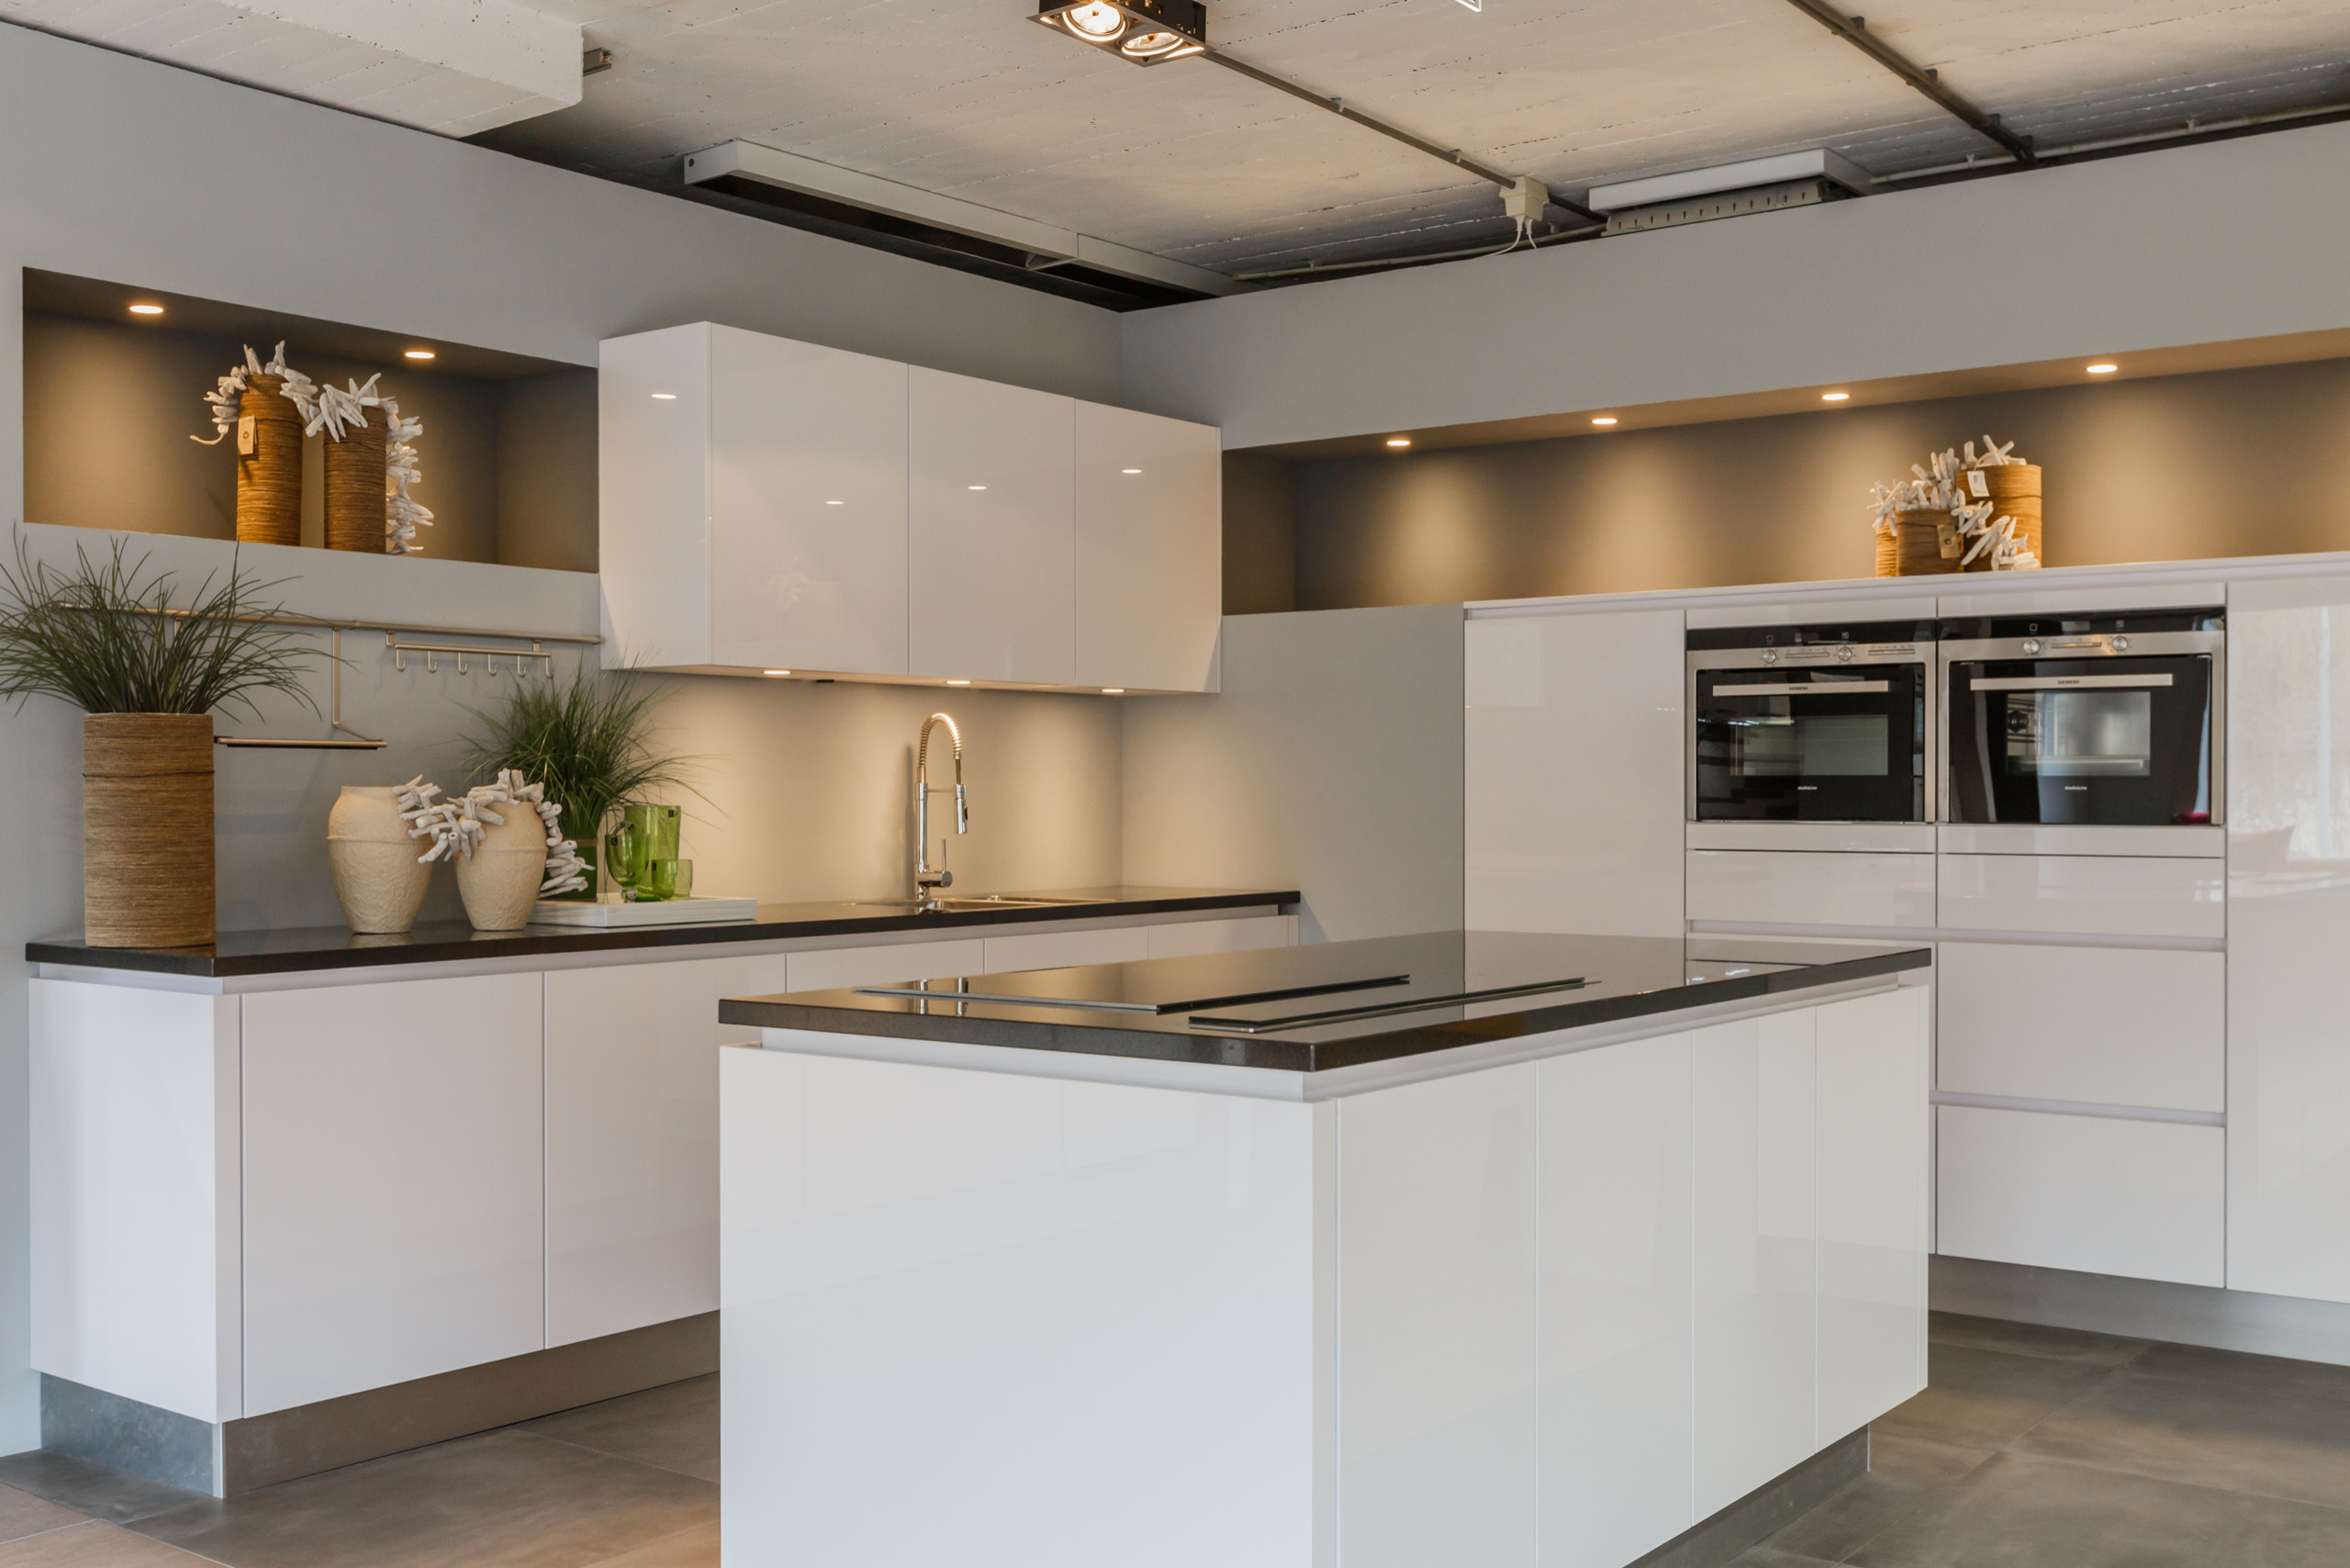 Showroom keukens - Modern - Kitchen - Amsterdam - by Keukensale Hilversum |  Houzz